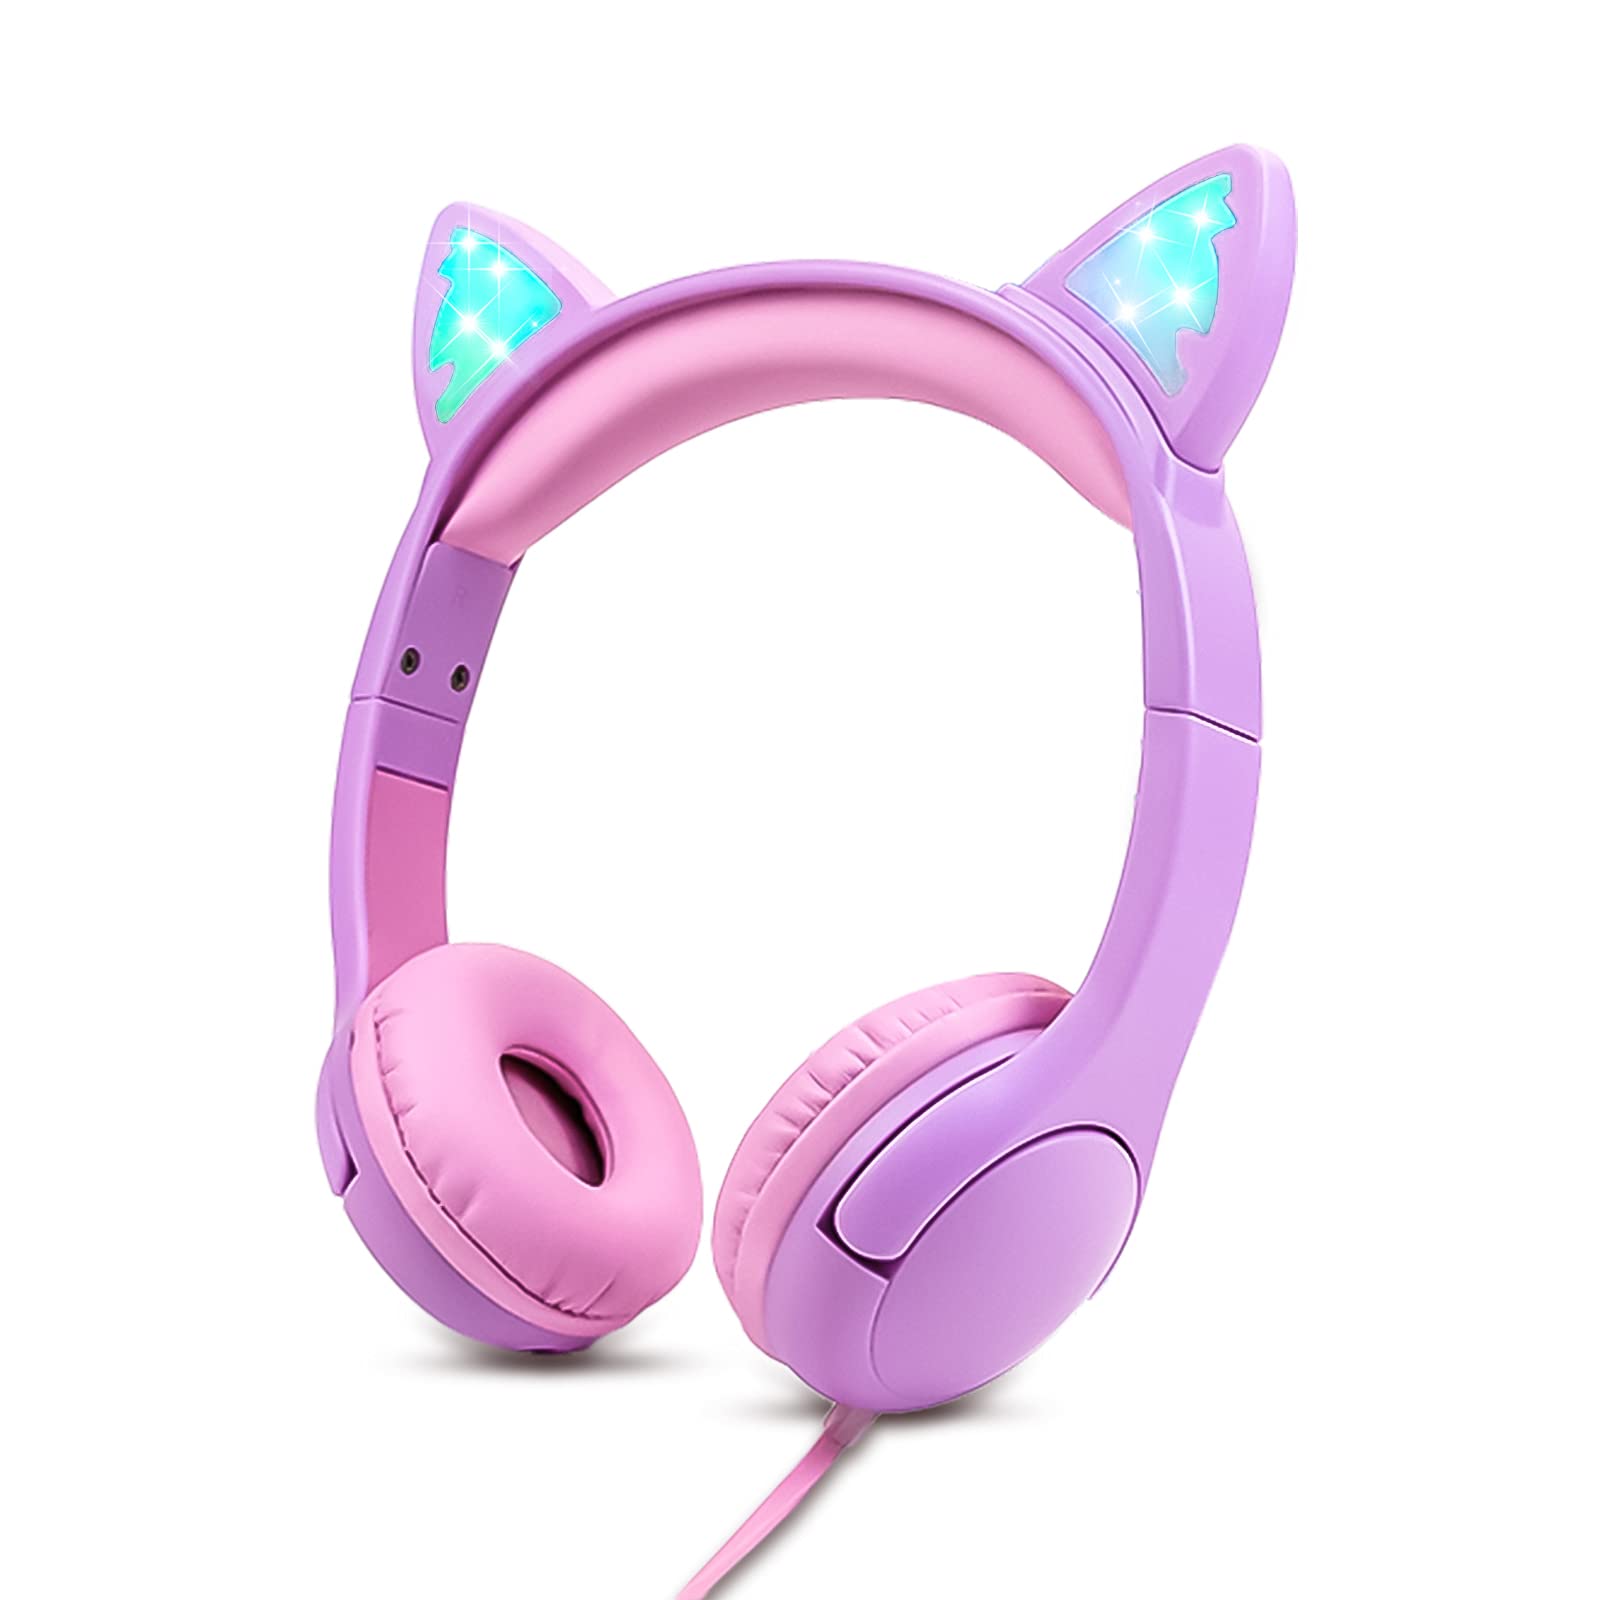 Olyre Kids Headphones, Safe 85db Volume Control Light Up Cat Ear Headphones for iPad Fire Tablet Kindle, On-Ear LED Children Headphones for School Learning Travel - Purple/Pink